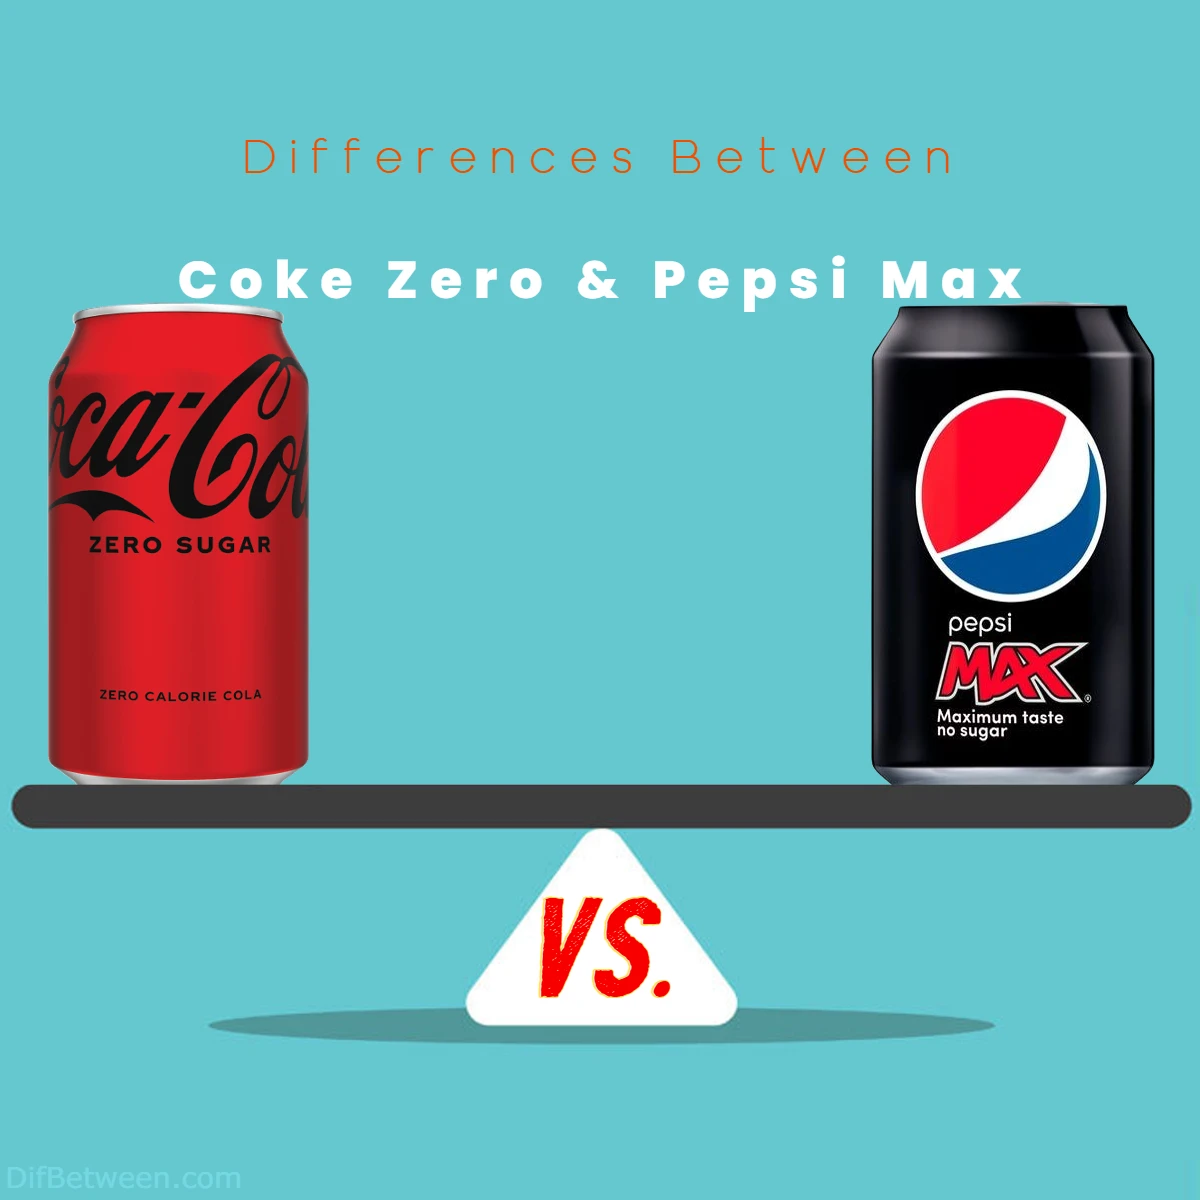 Differences Between Pepsi Max and Coke Zero